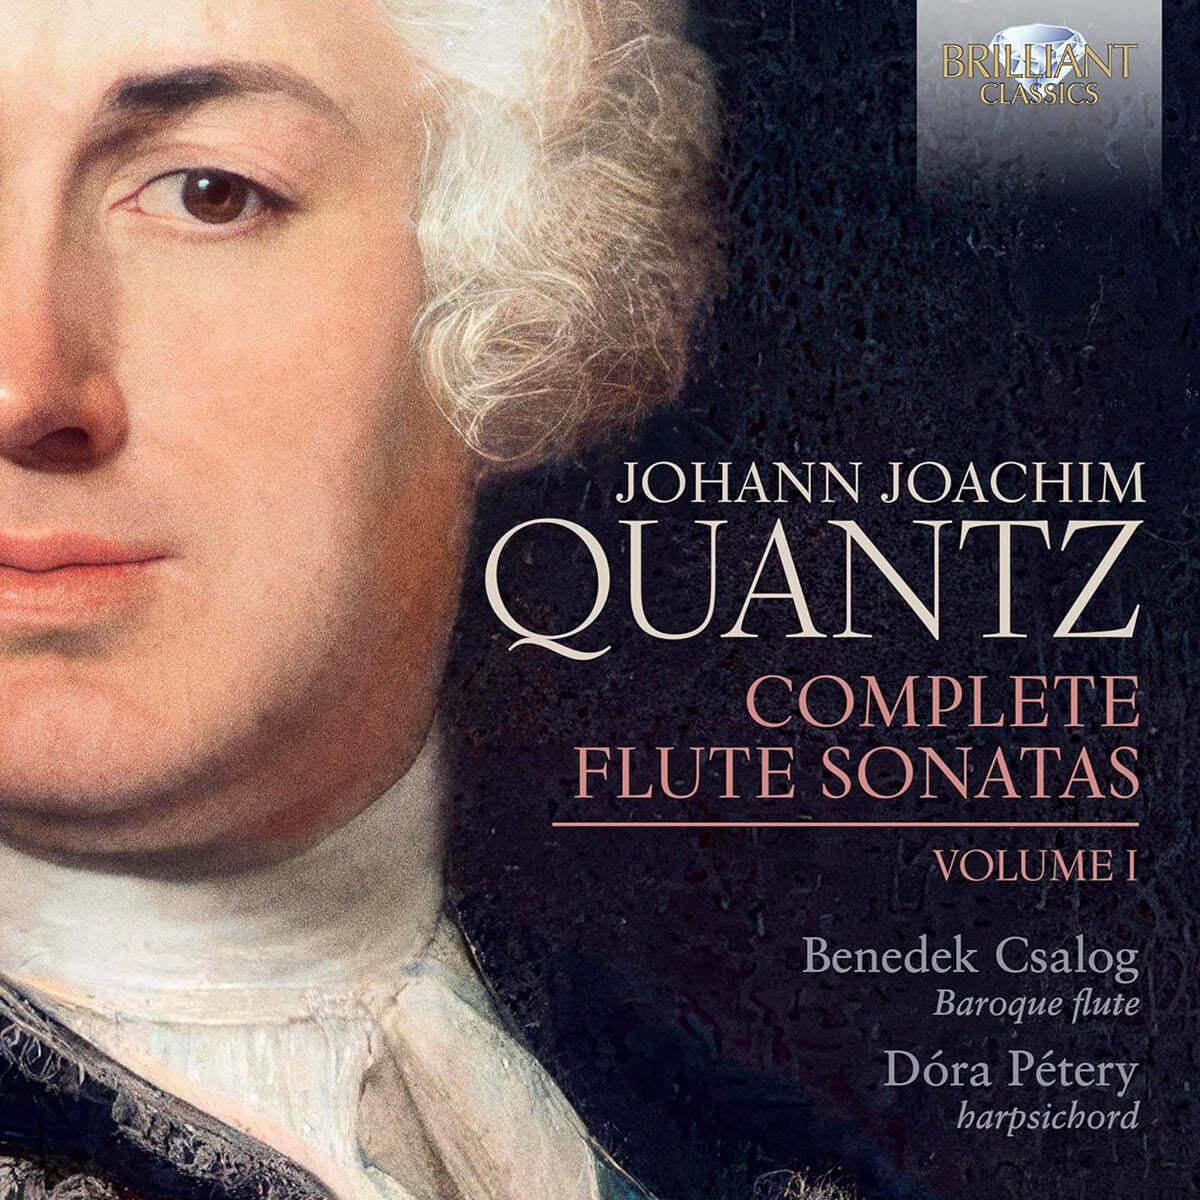 Benedek Csalog / Dóra Pétery 크반츠: 플루트 소나타 전곡, 제1집 (Quantz: Complete Flute Sonatas, Vol.1)